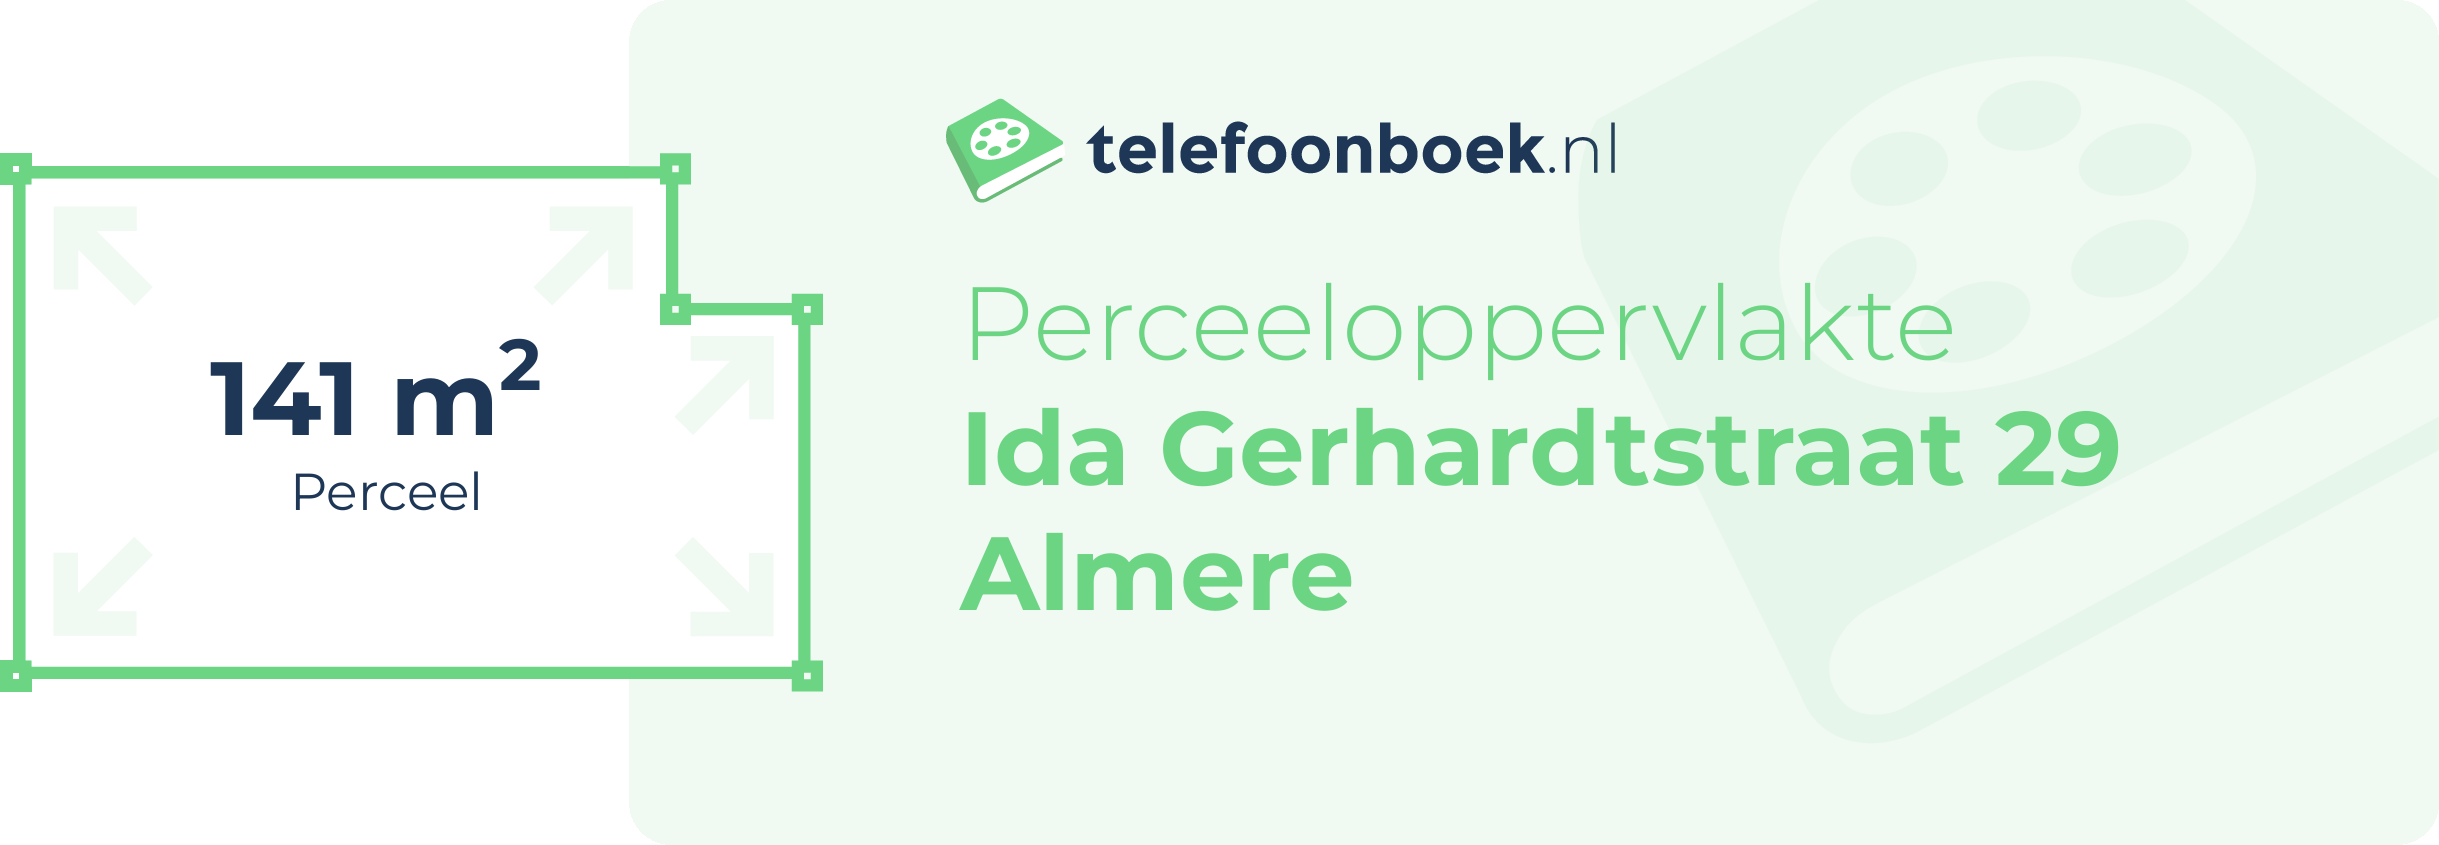 Perceeloppervlakte Ida Gerhardtstraat 29 Almere